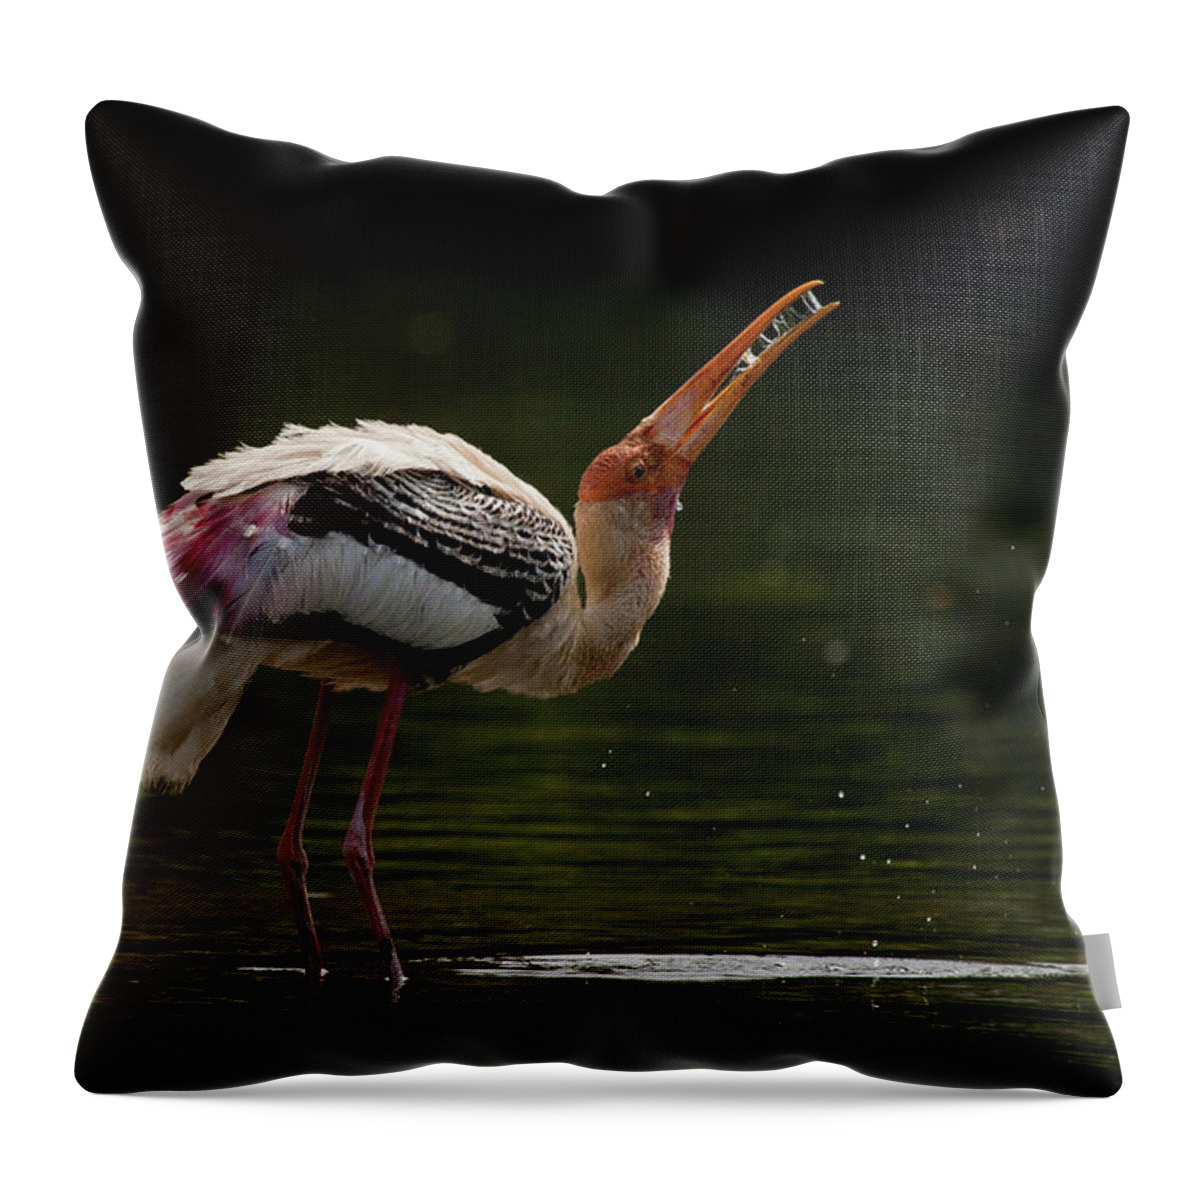 Animal Themes Throw Pillow featuring the photograph Painted Stork by (c) Niranj Vaidyanathan V.niranj@gmail.com